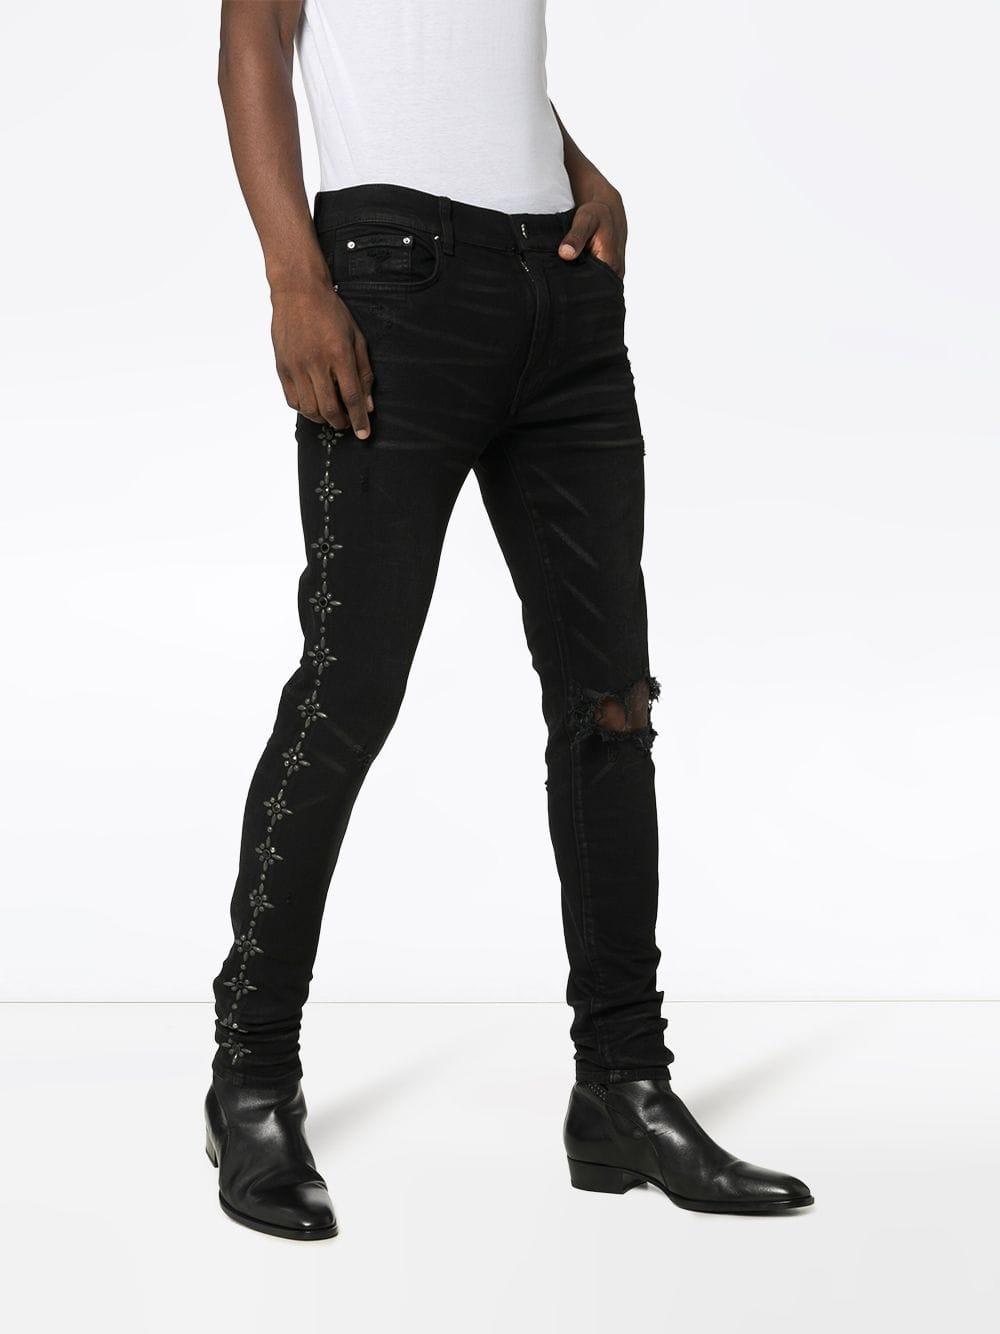 Amiri Synthetic Broken Side Studded Skinny Jeans in Black for Men - Lyst